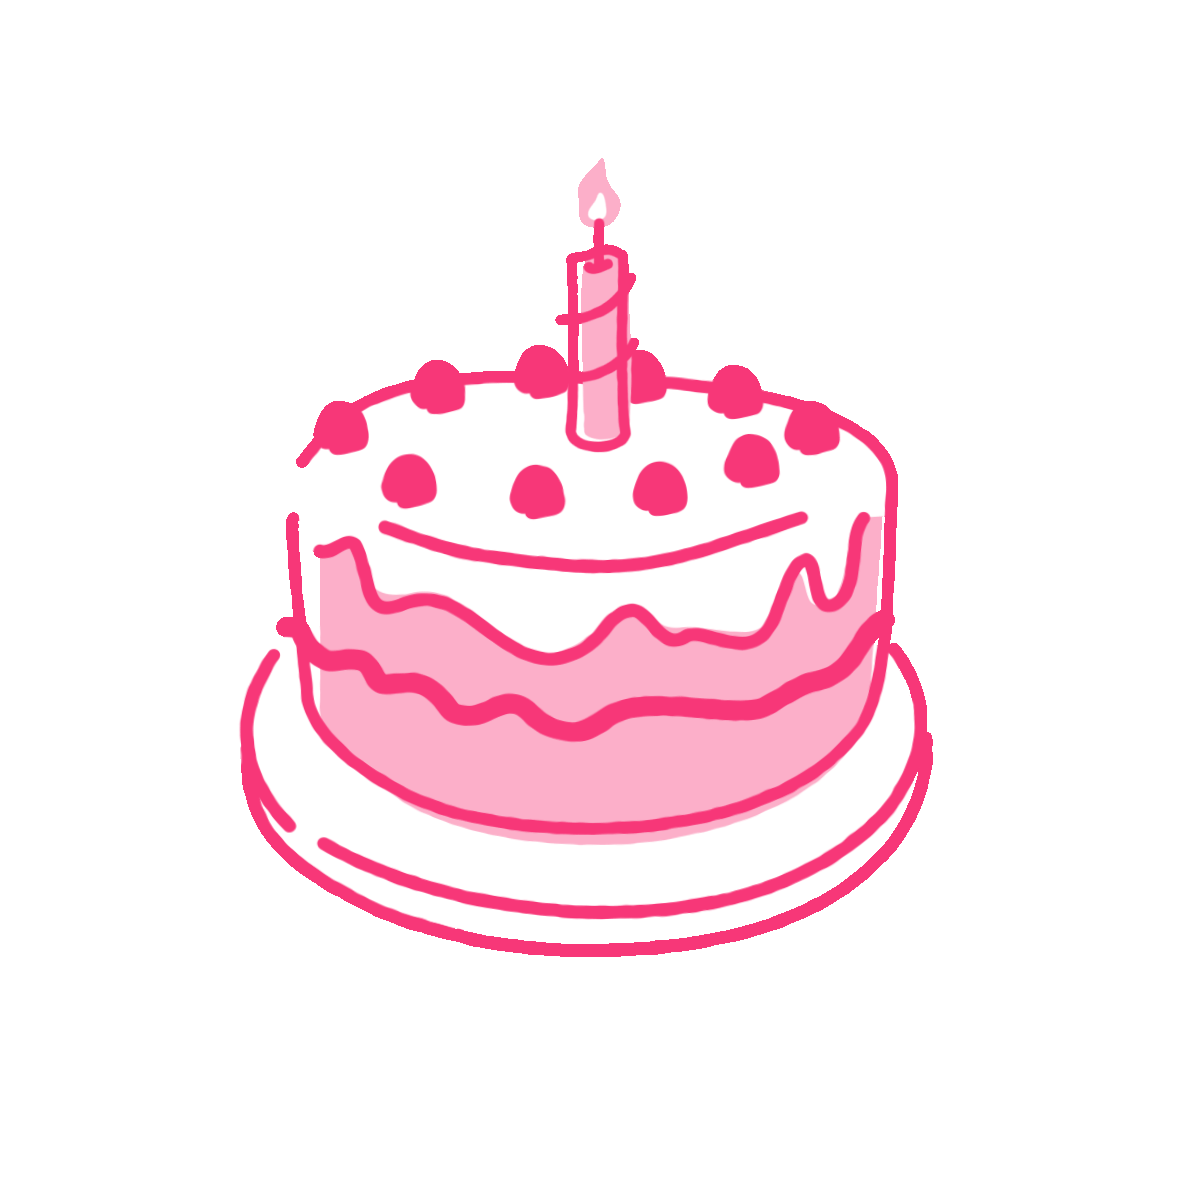 Birthday cake slice by Isaree Sook - LottieFiles